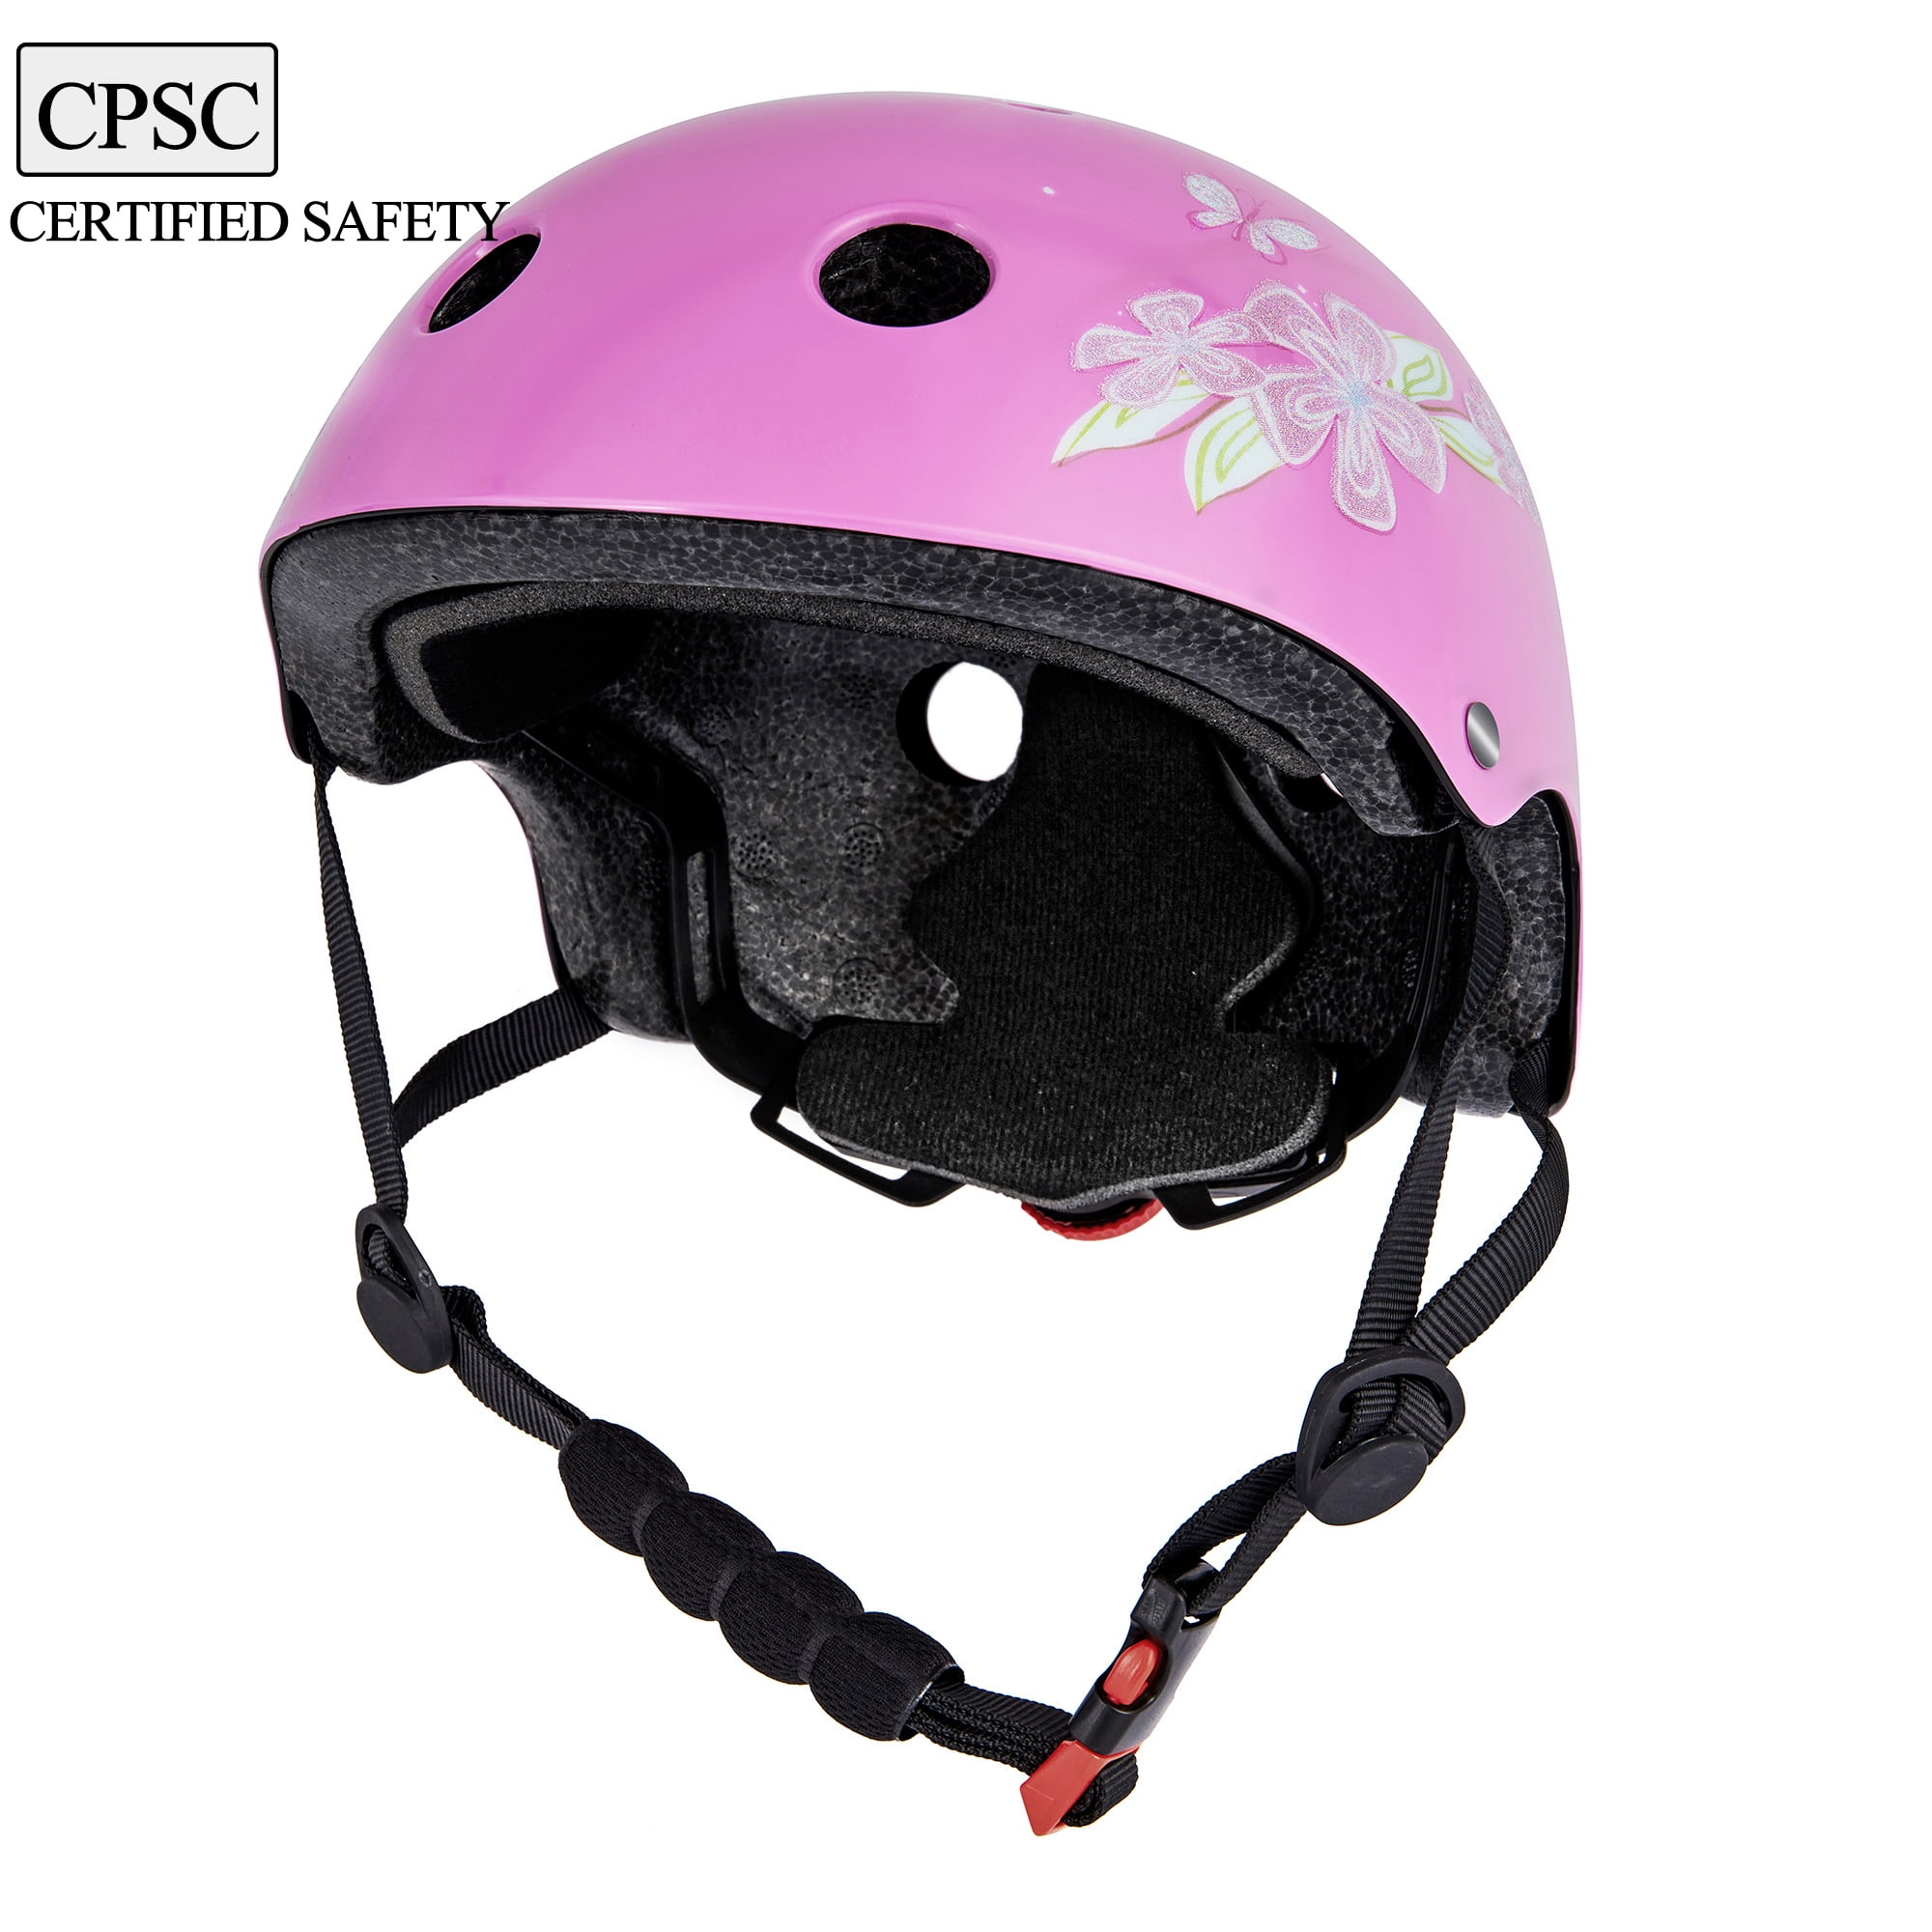 Skateboard Helmet Bike Helmet Sport Helmet for Kids Youth Adults Adjustable Bicycle Helmet for Skating Cycling Scooter for Boys Girls CPSC Certified 